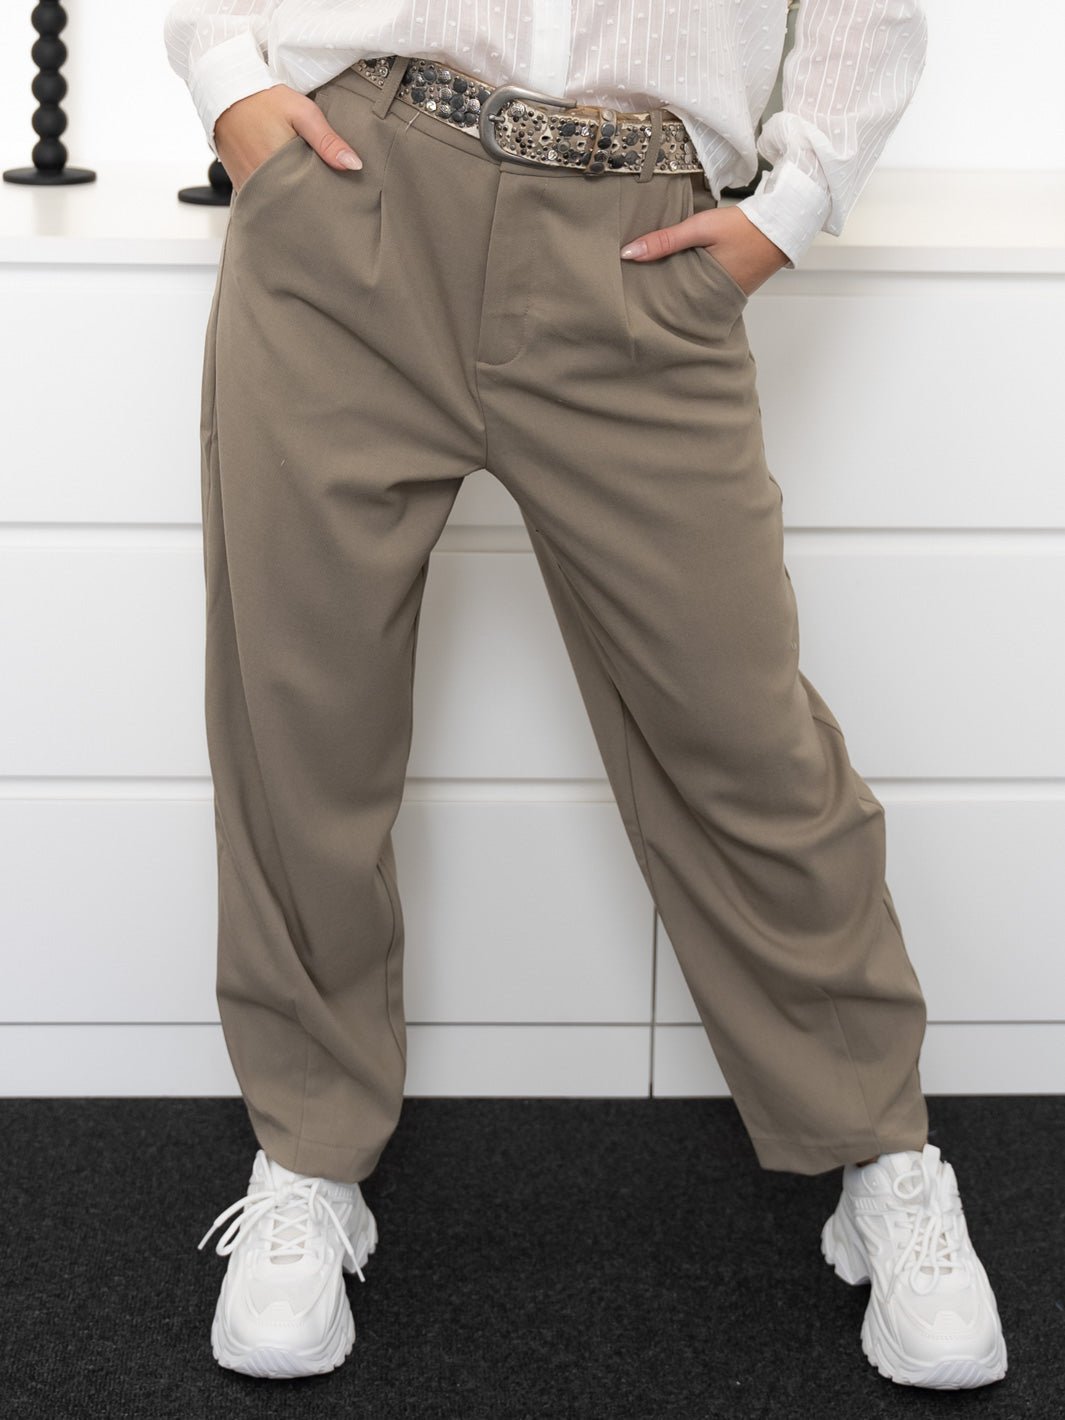 Kaffe KAmerle 7/8 pants suiting brindle - Online-Mode